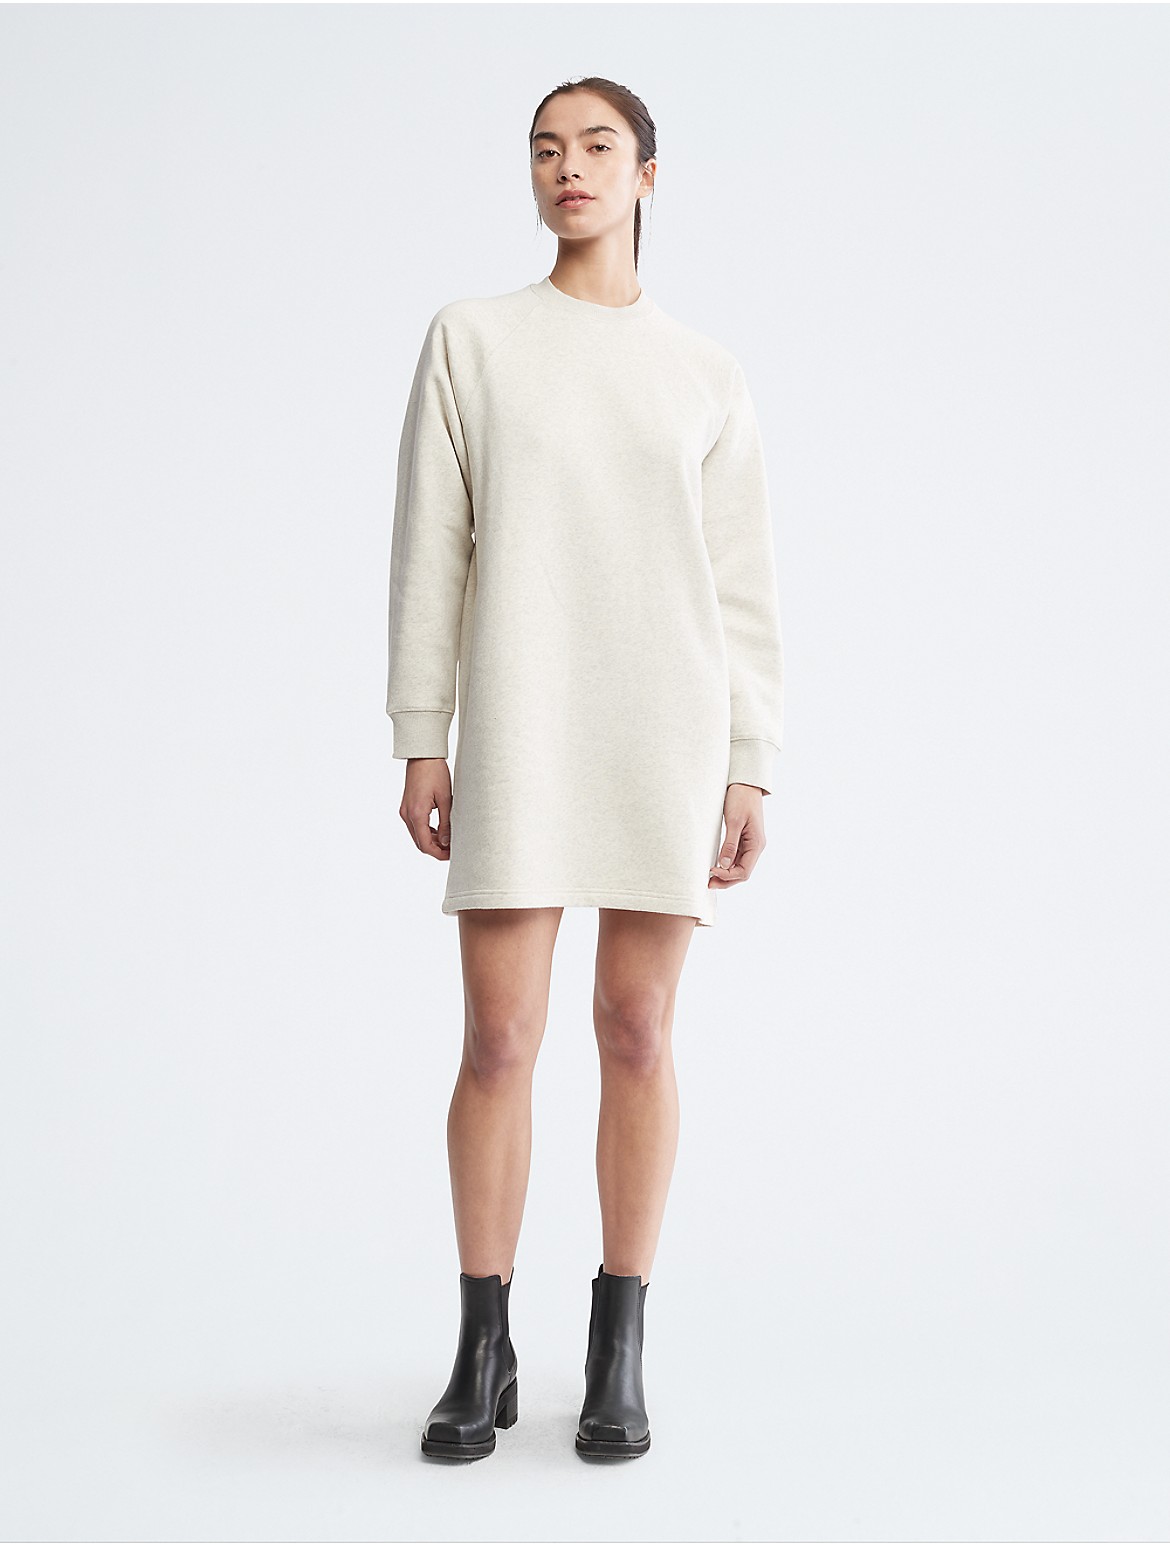 Calvin Klein Women's Archive Logo Fleece Sweatshirt Dress - Neutral - S